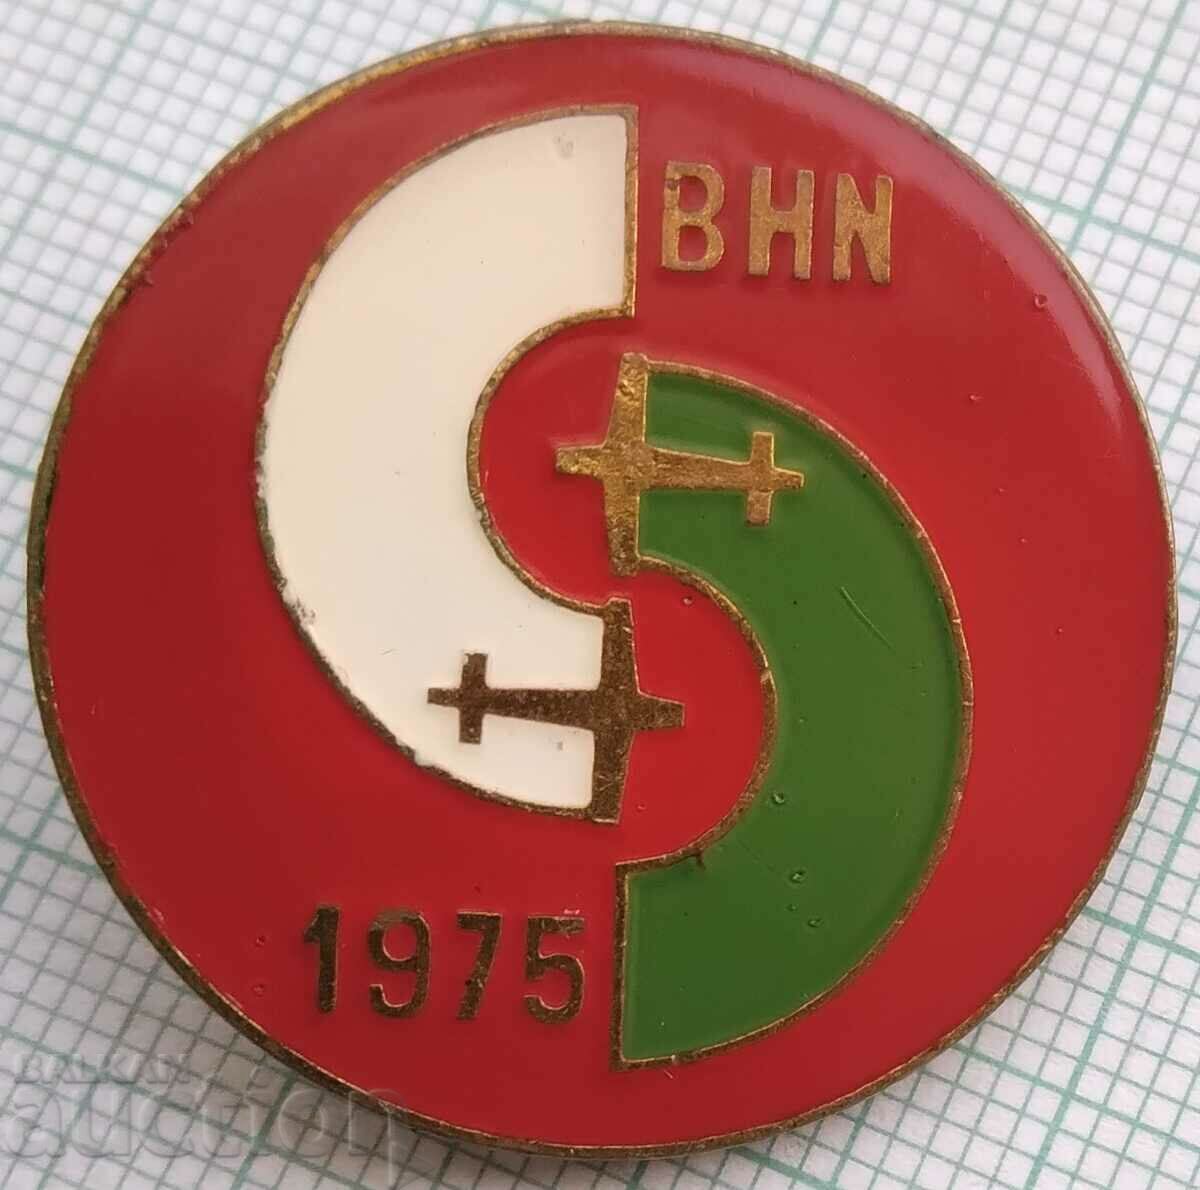 14402 Badge - Aviation BHN 1976